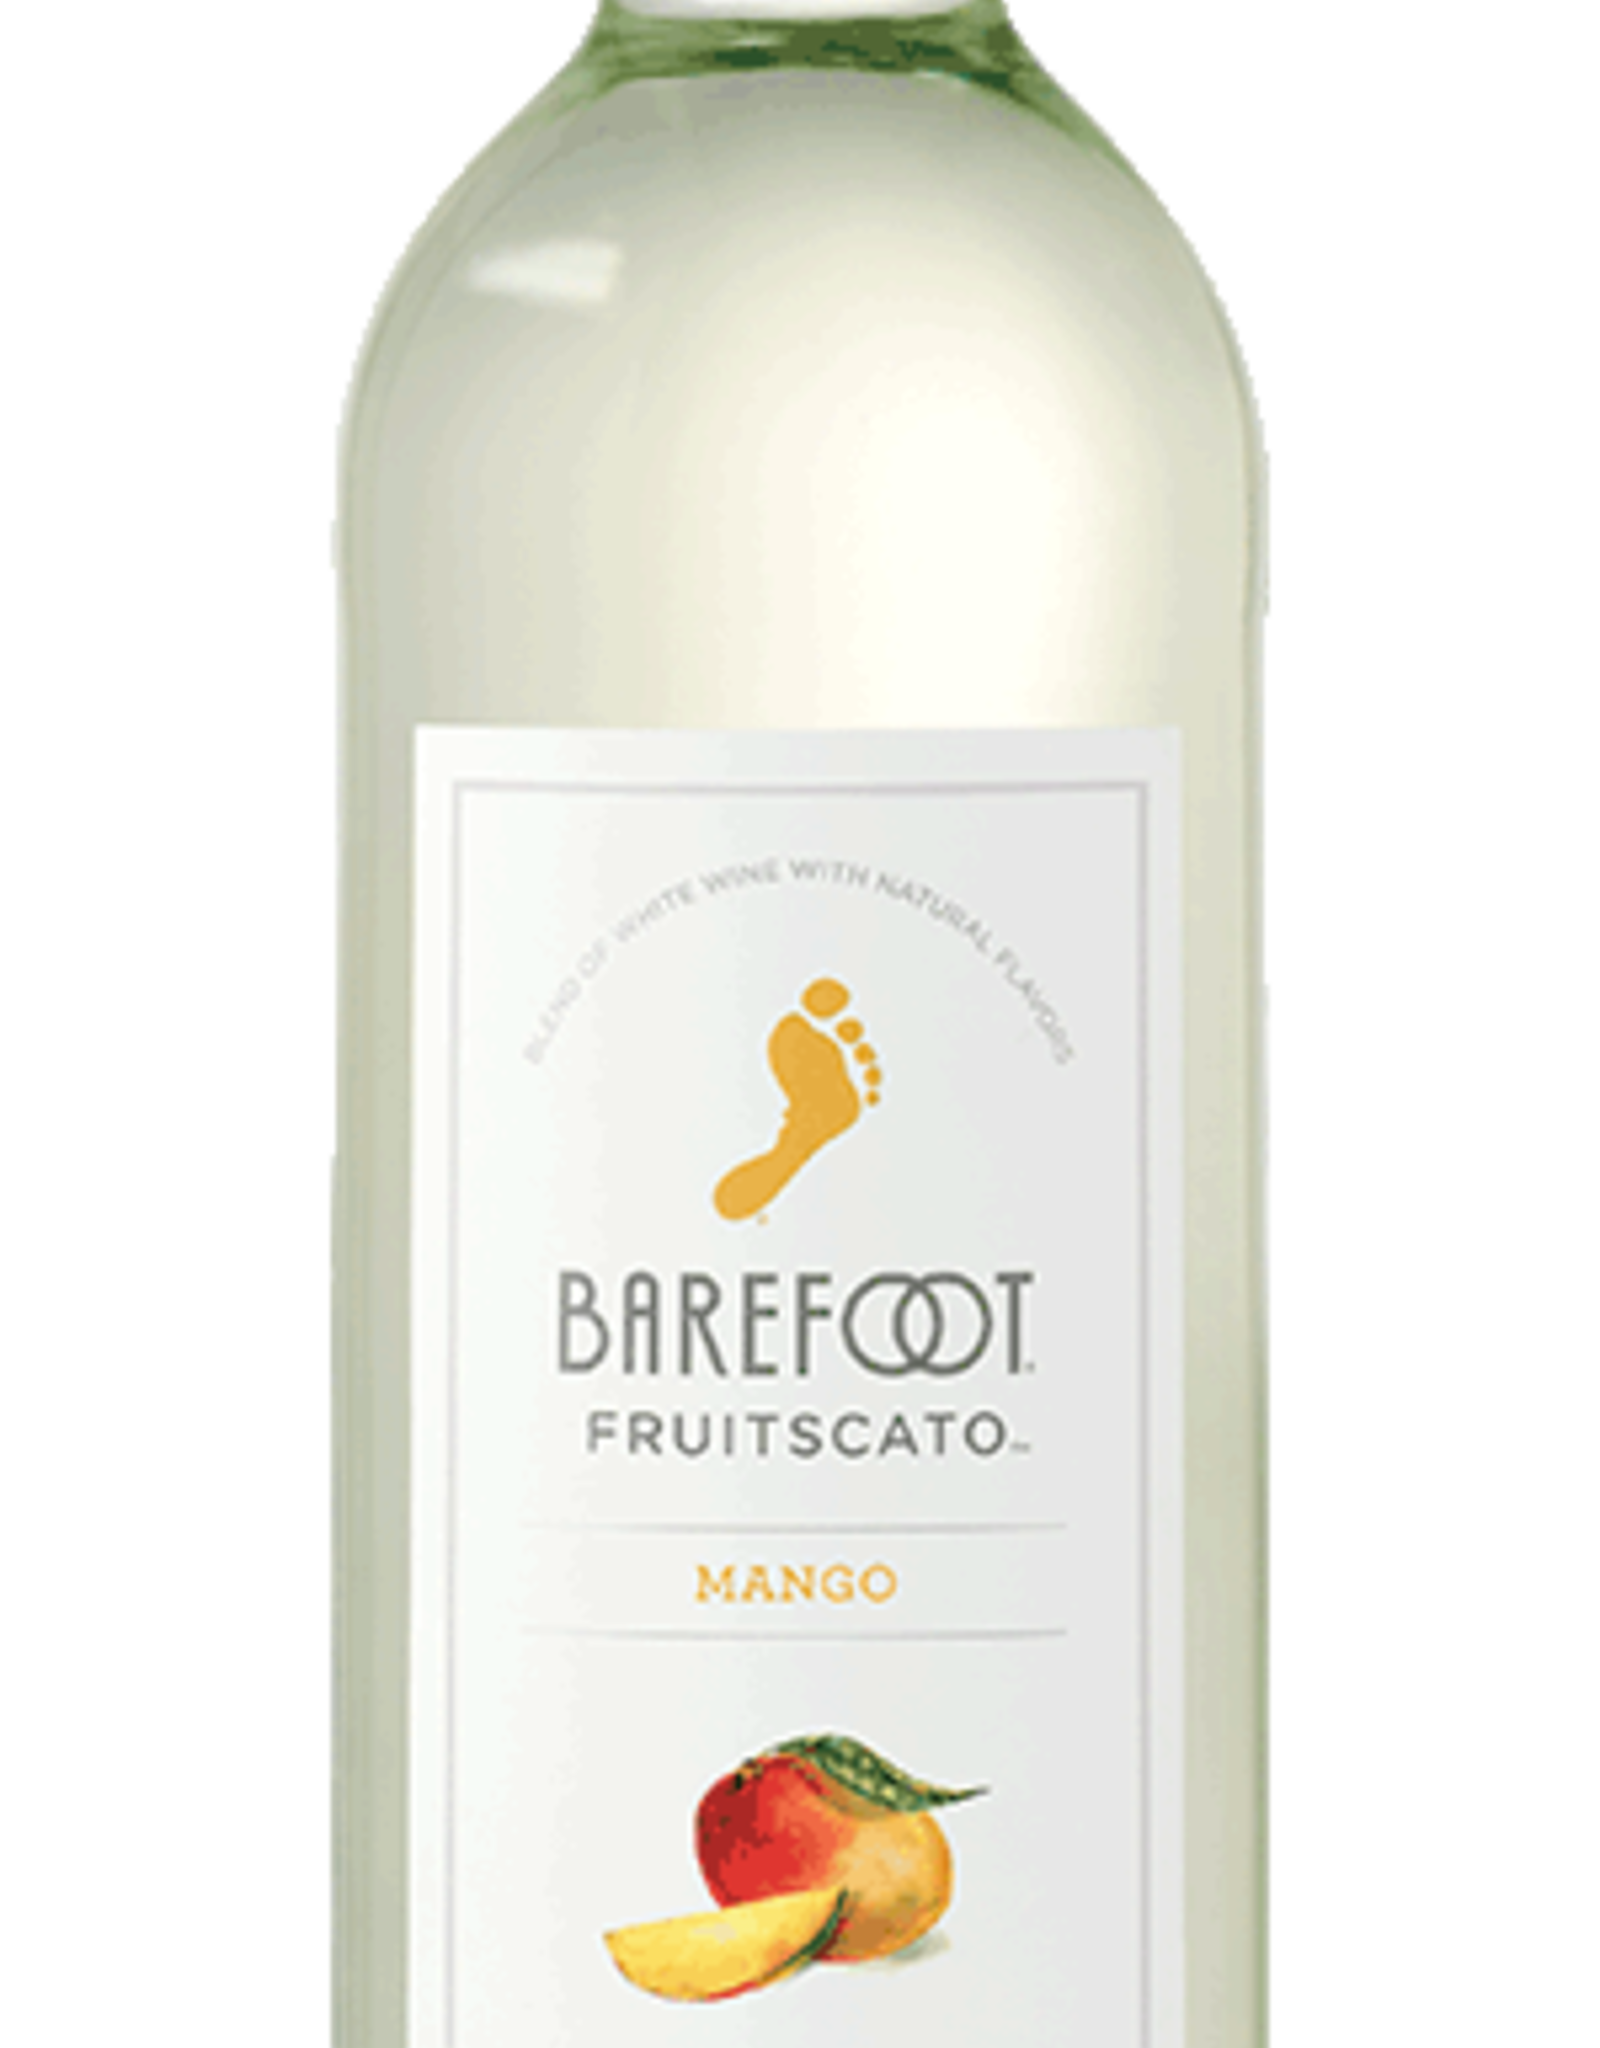 Barefoot Barefoot